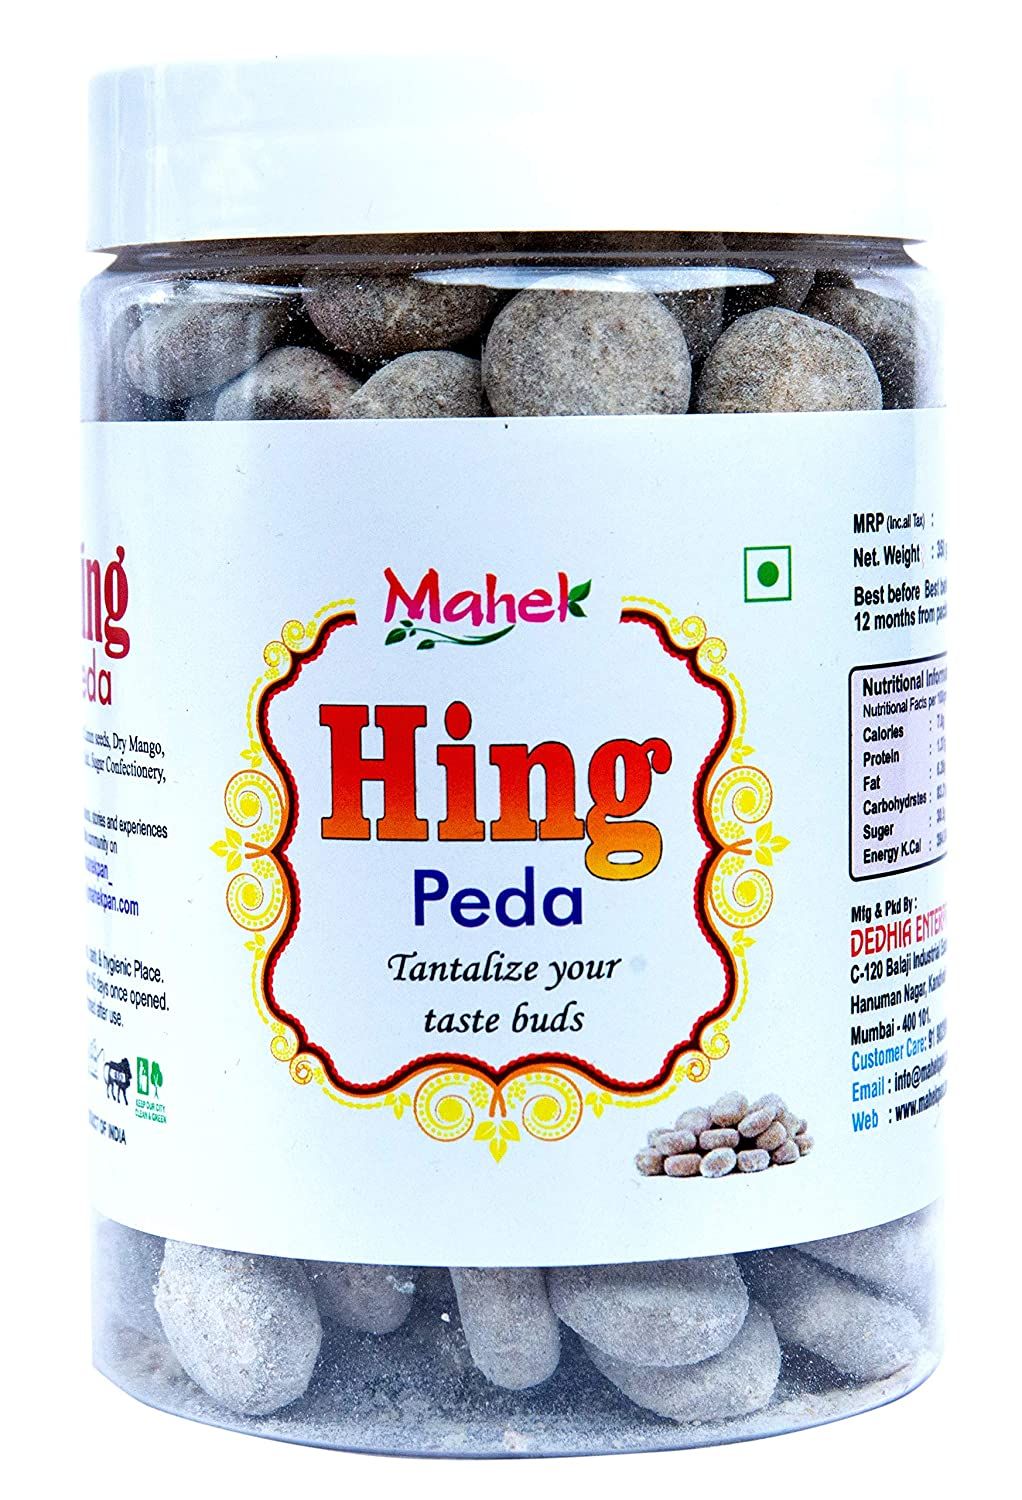 Mahek Hing Peda Image